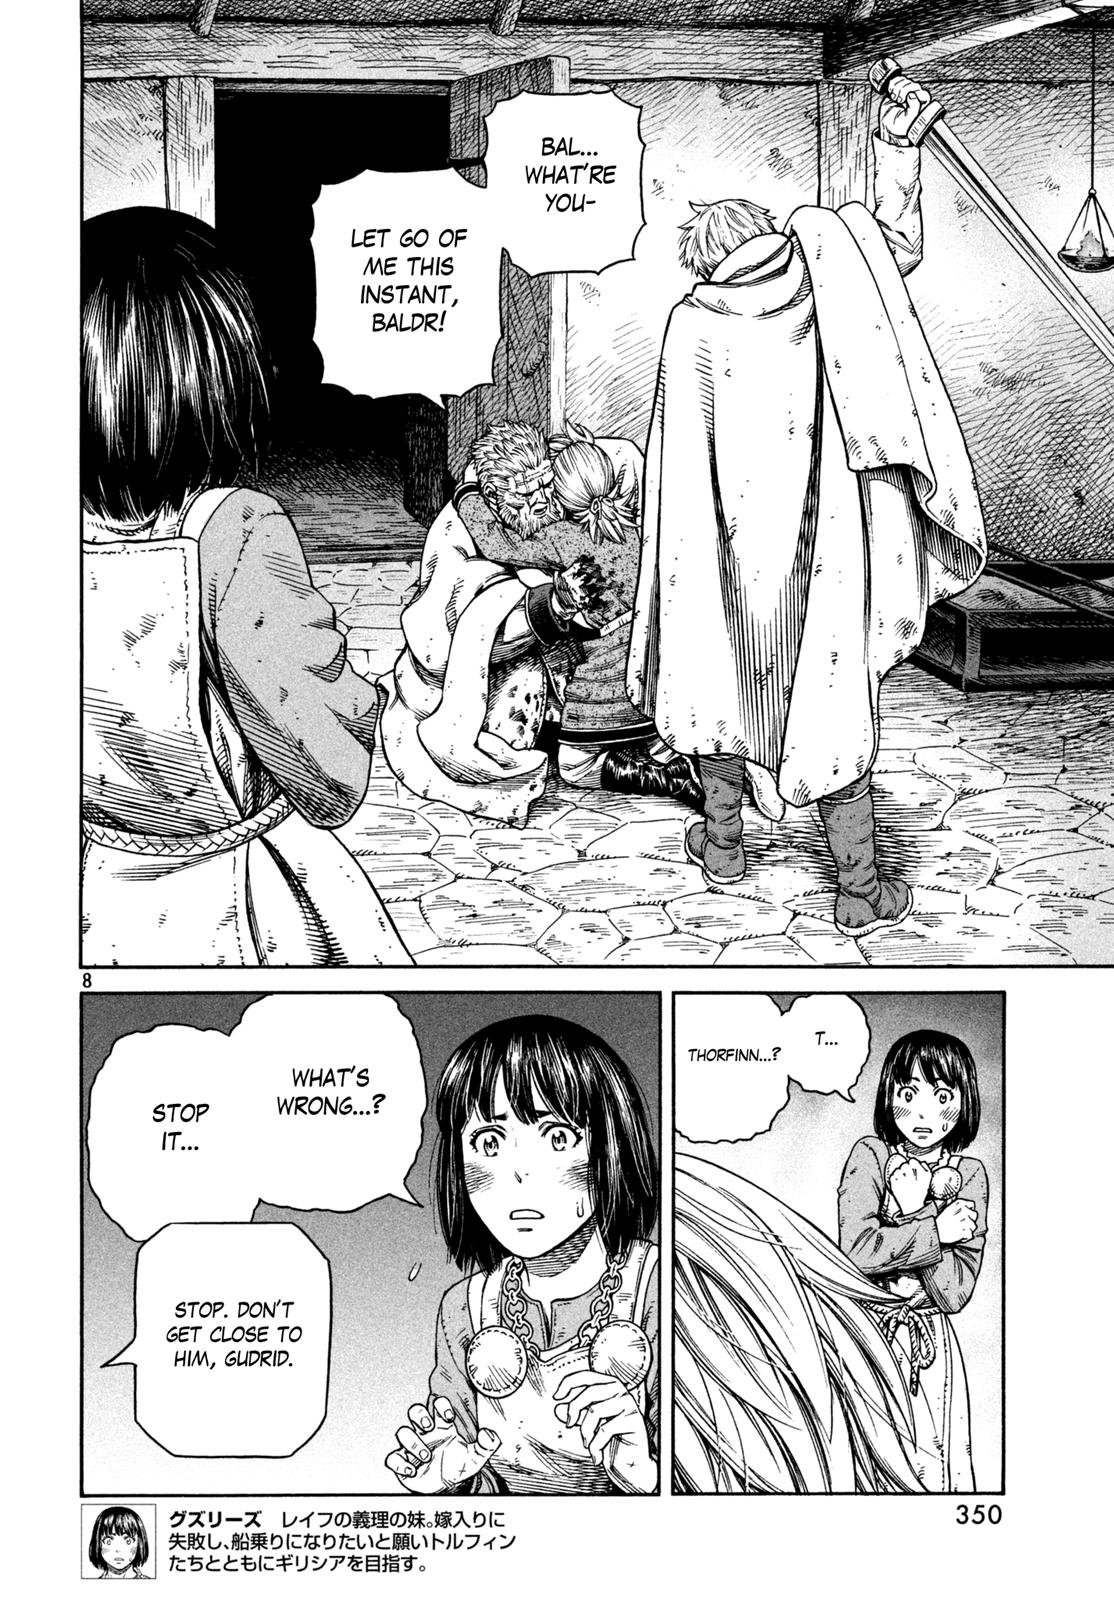 Vinland Saga Manga Manga Chapter - 149 - image 8